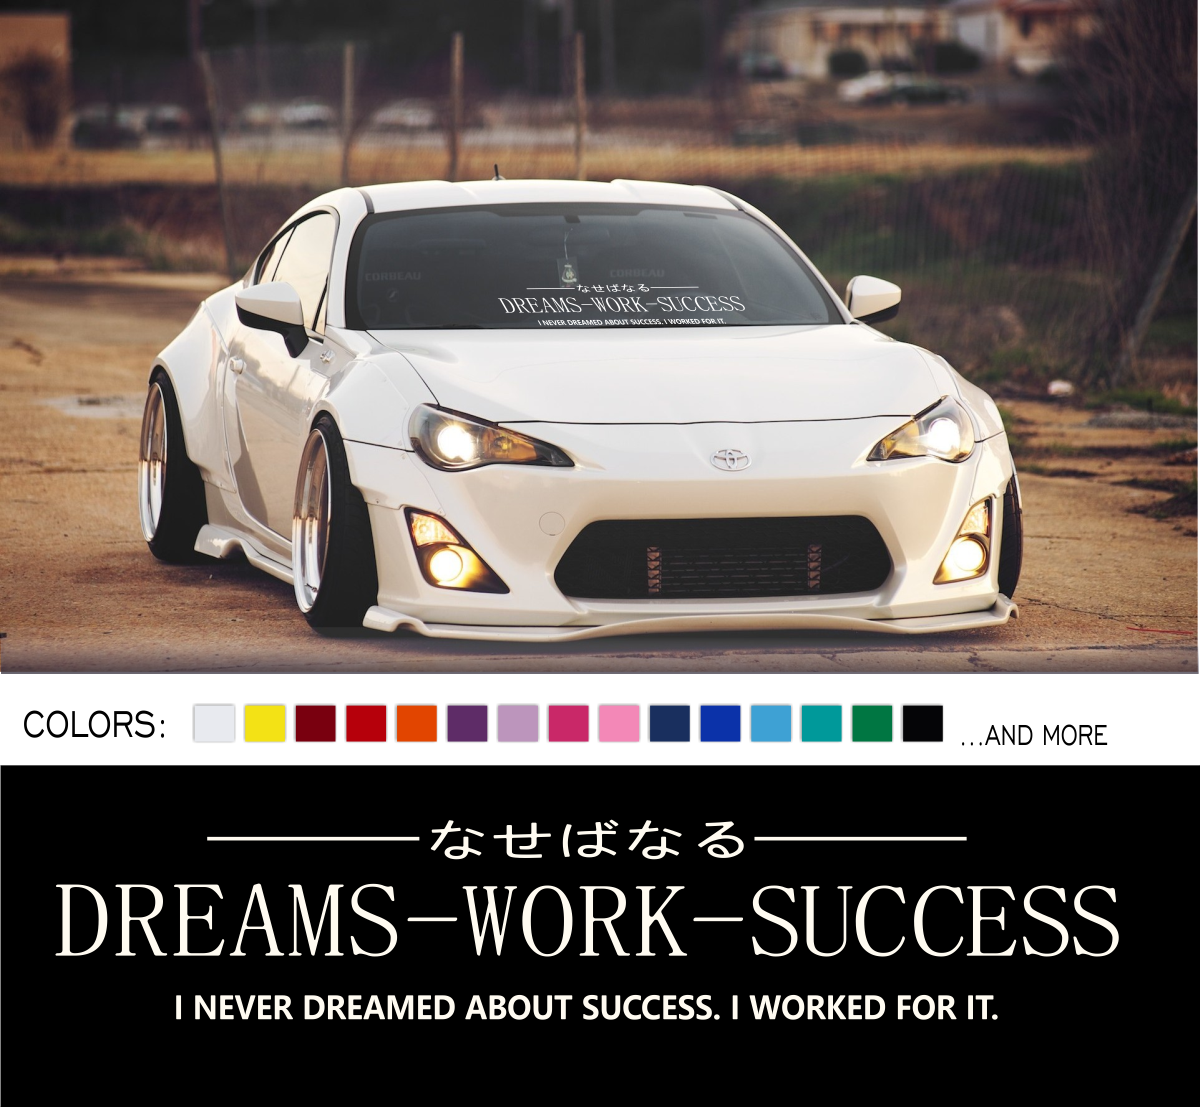 Dreams work success sticker decal - stickyart - 2